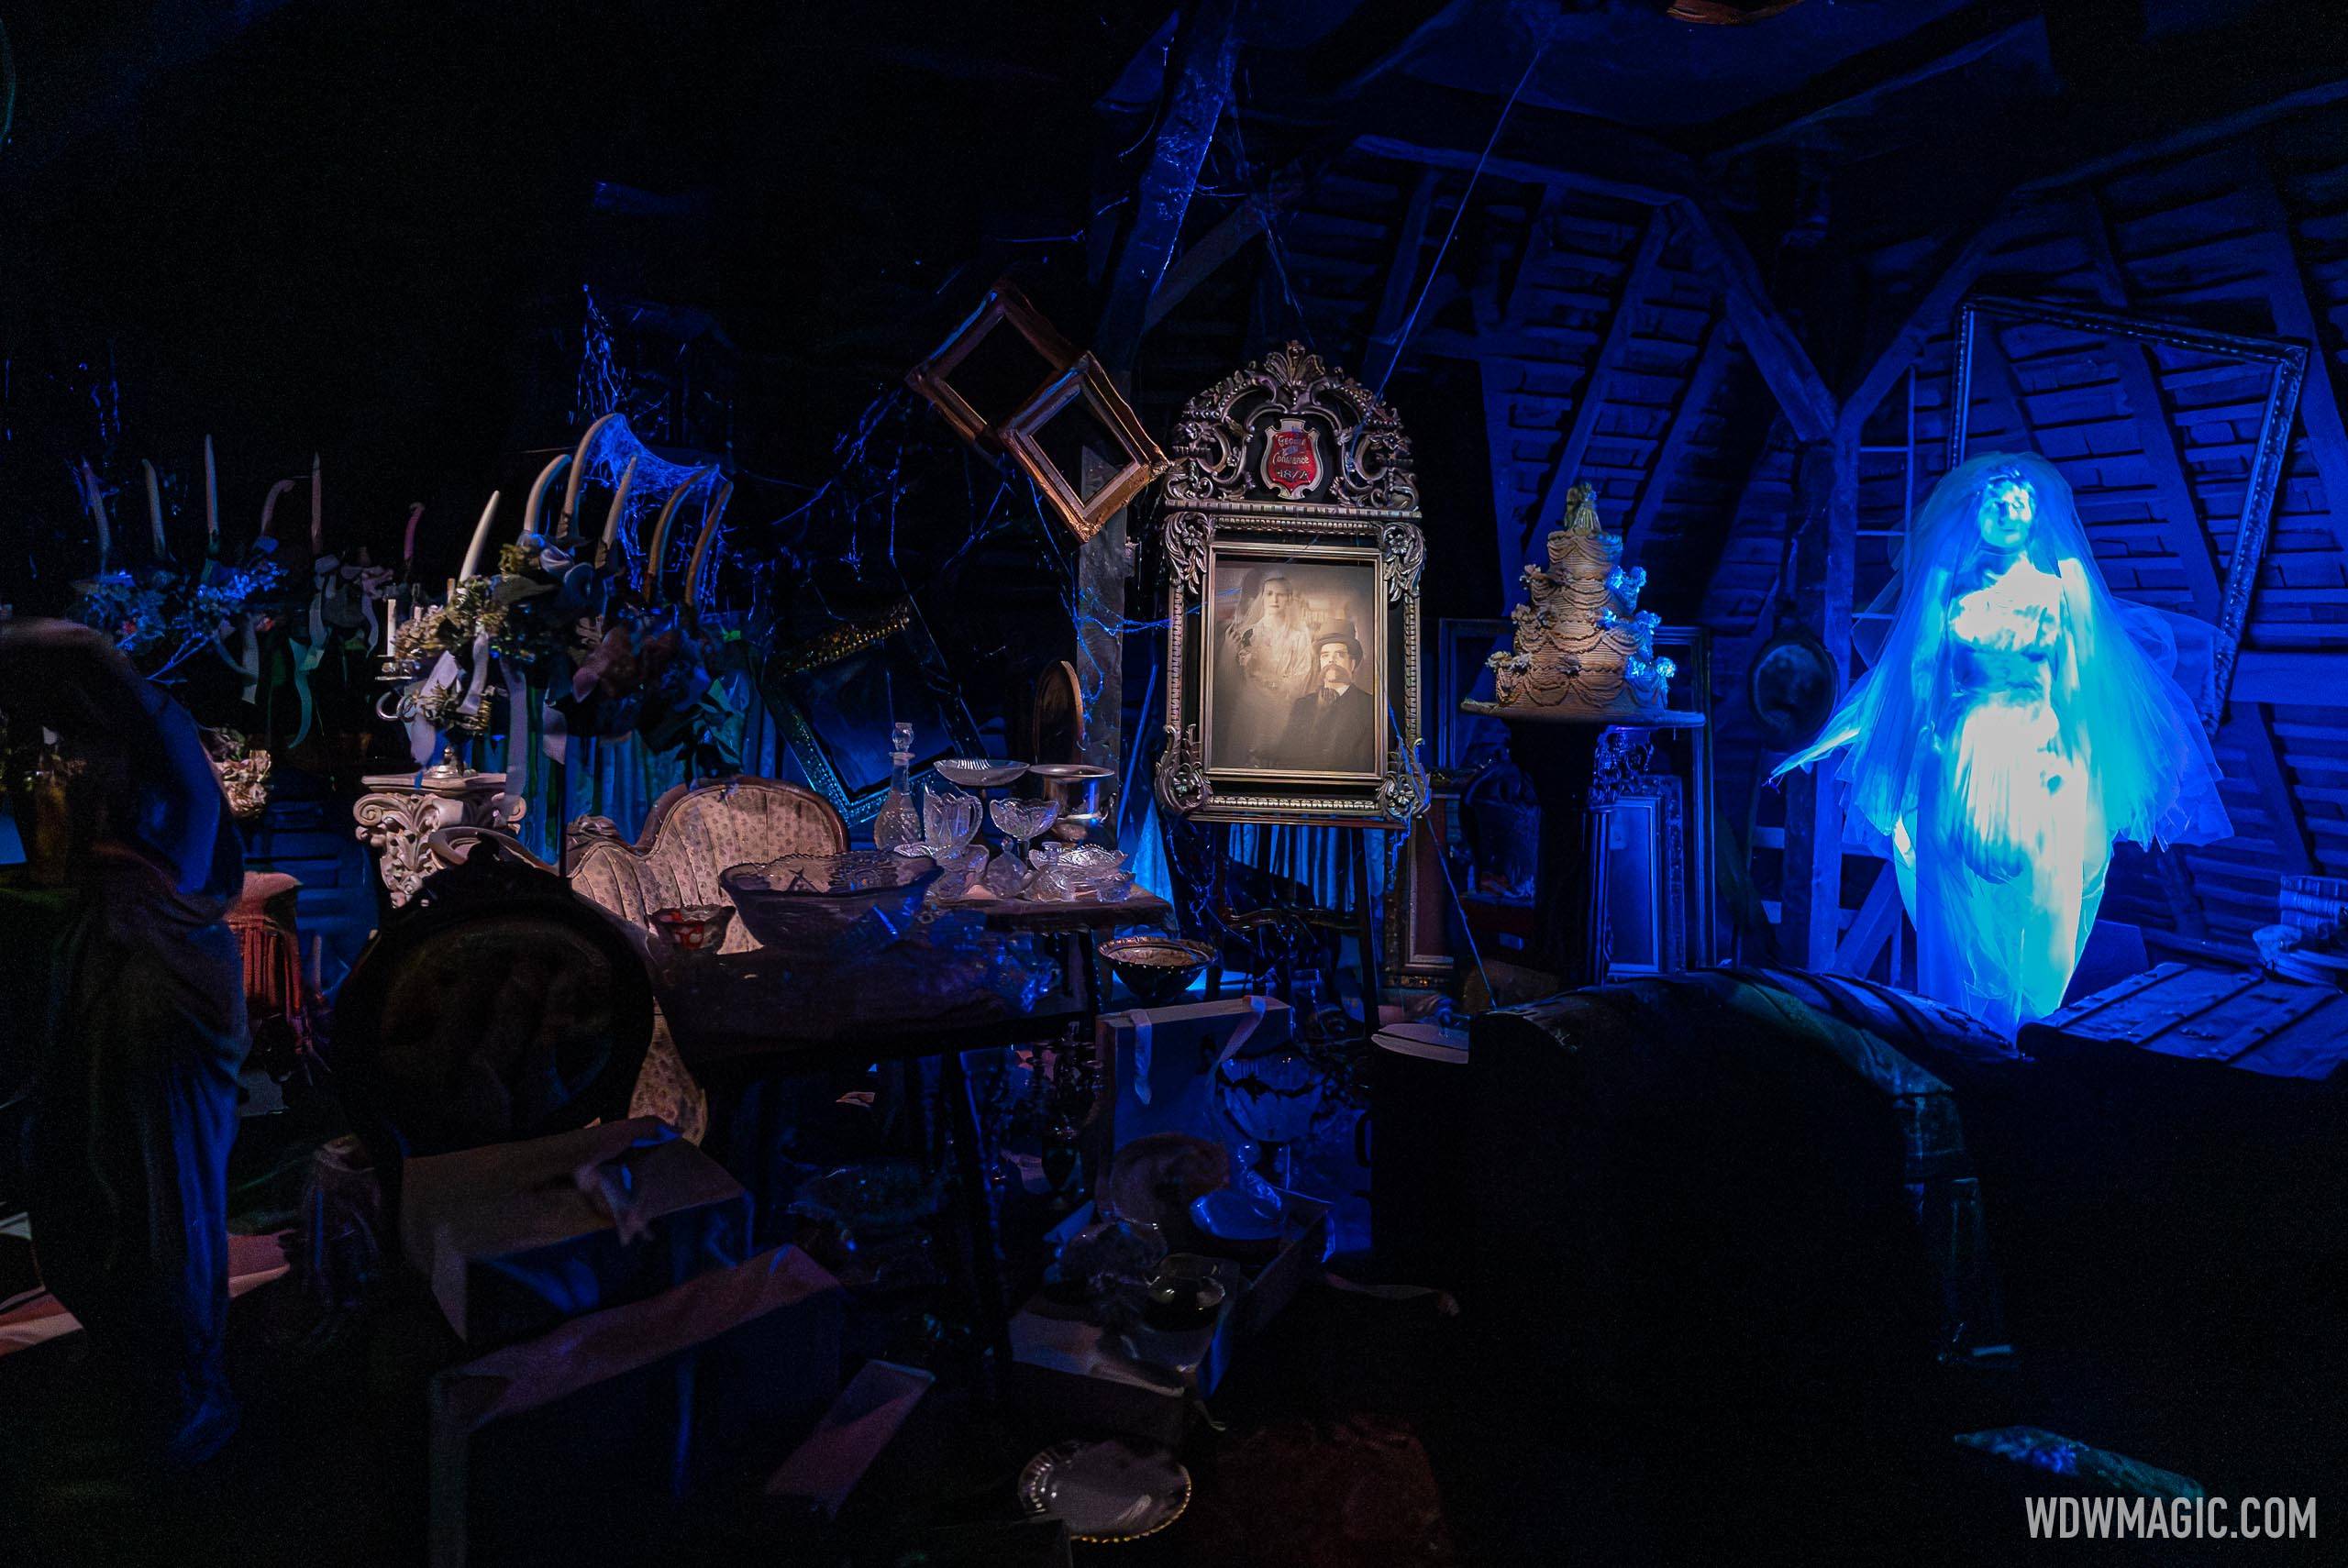 VIDEO - Imagineer Jason Surrell's Haunted Mansion presentation from the Disney Parks Blog meet last night